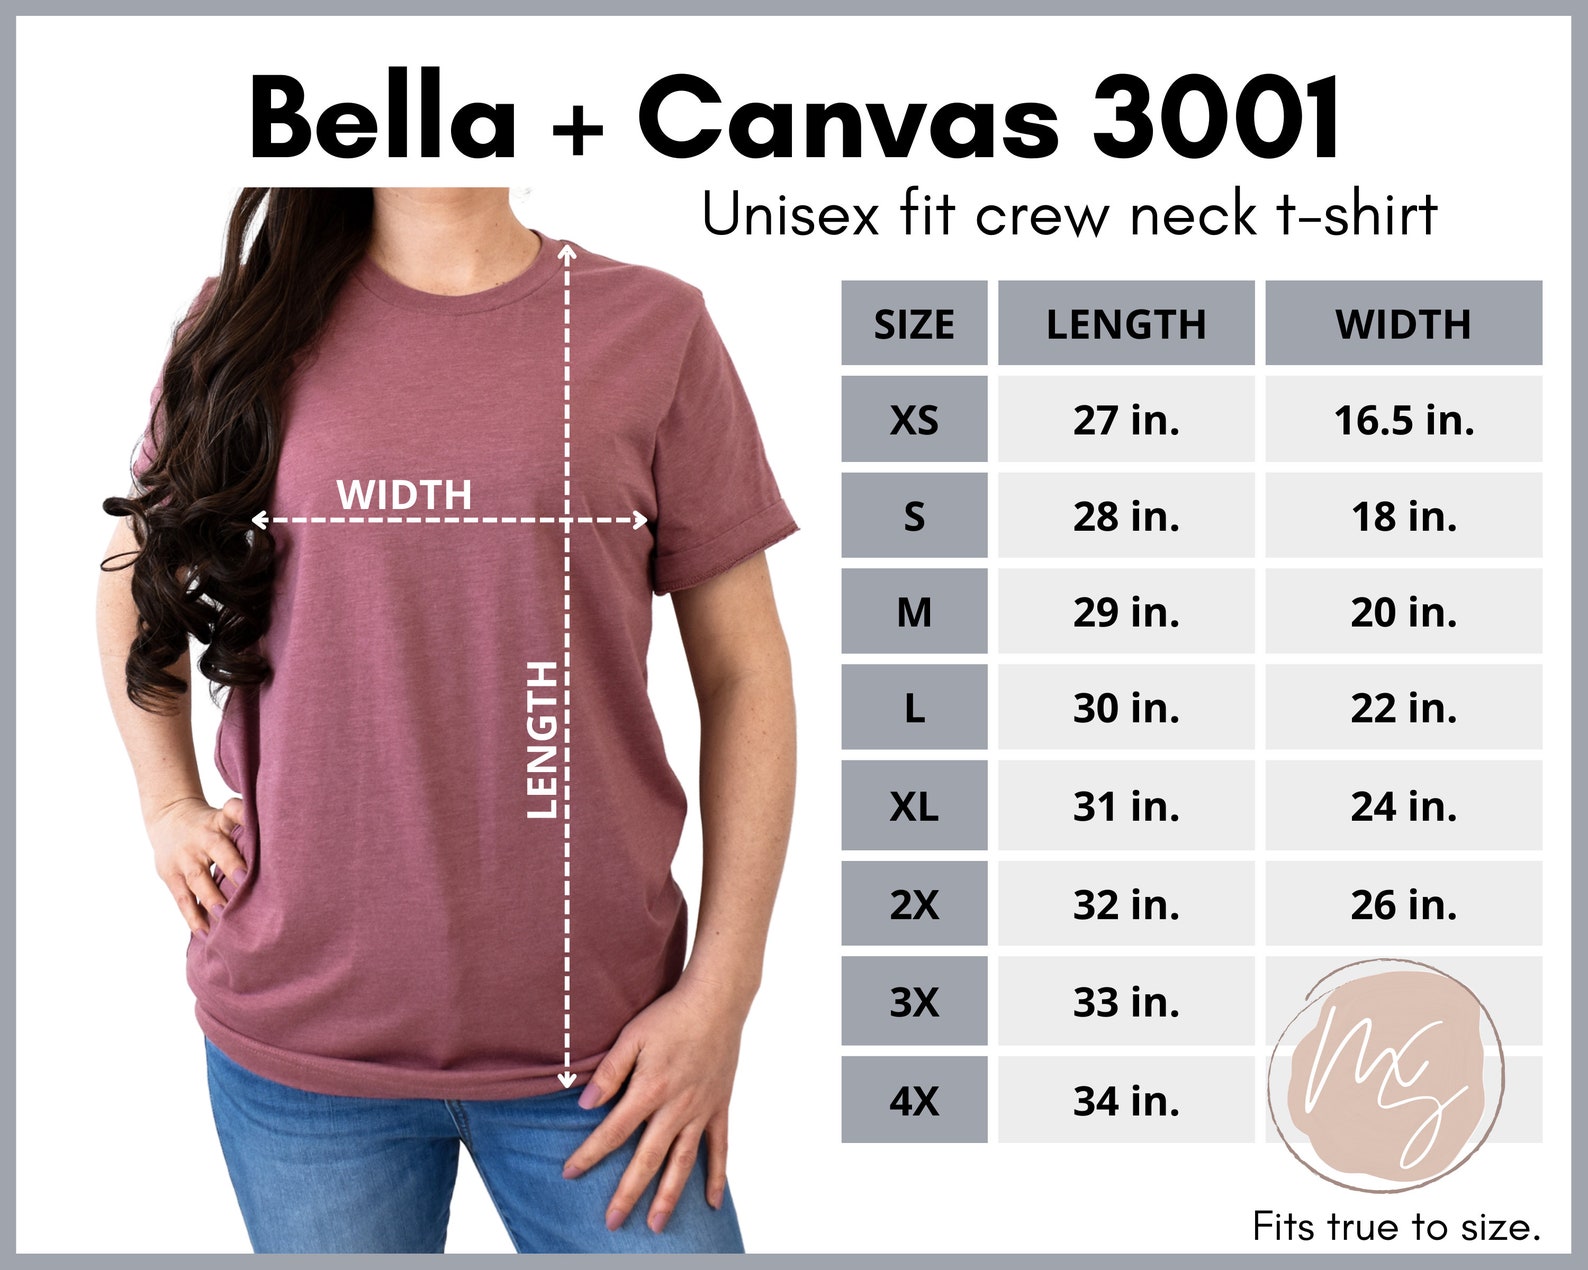 Bella Canvas 3001 Size Chart 3001 Mockup Unisex Size Chart - Etsy